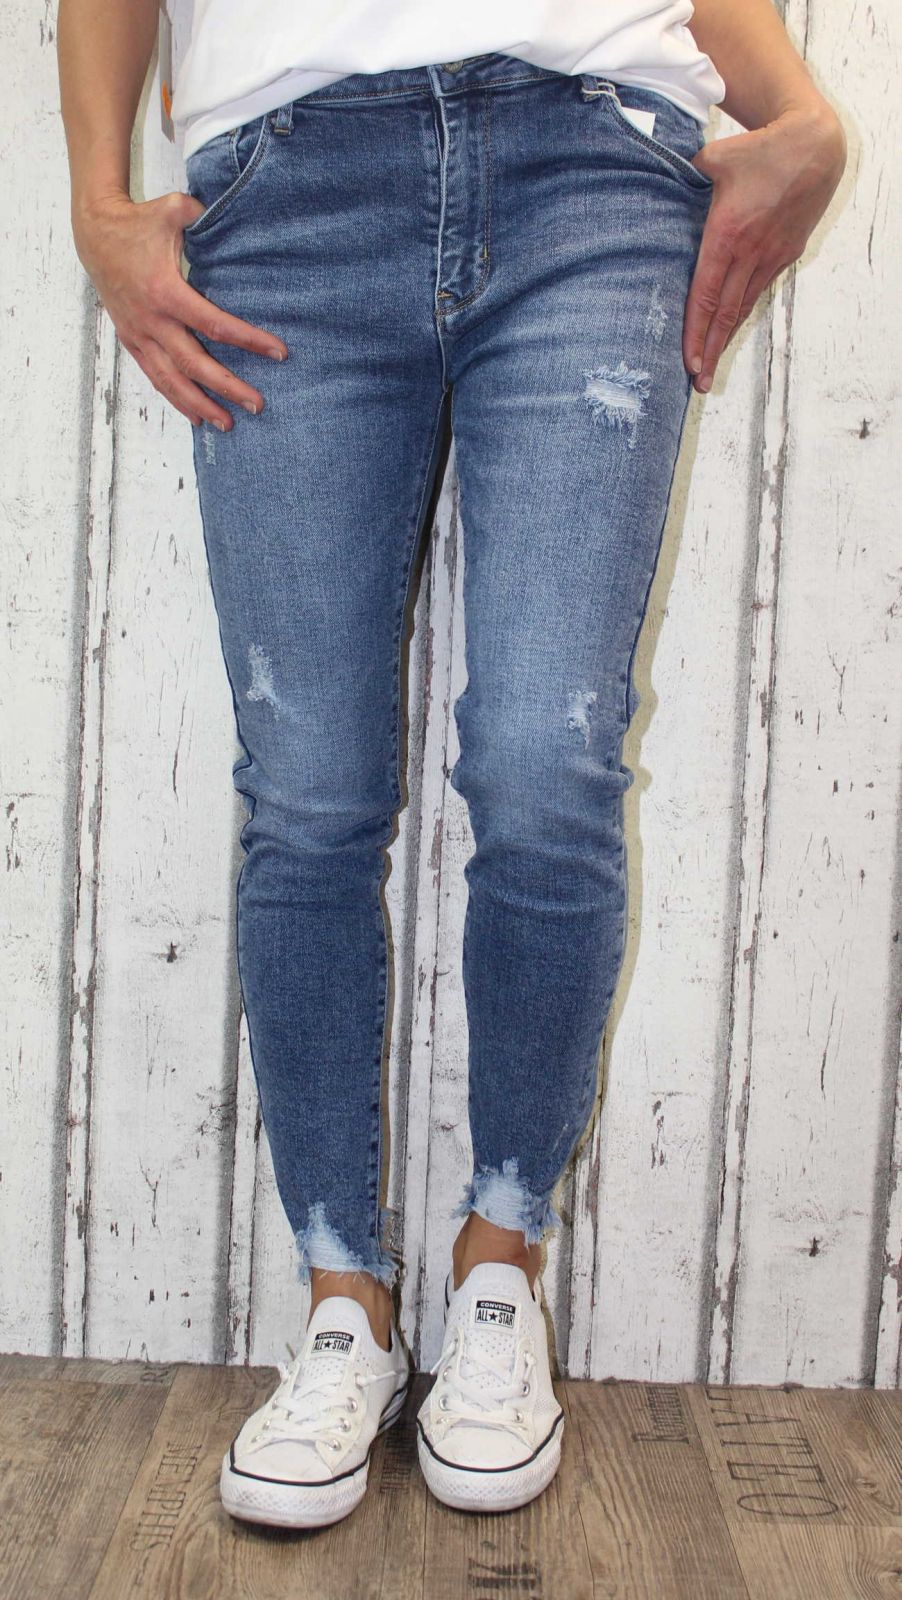 dámské elastické džíny, džíny skiny, dívčí elastické džíny, krátké džíny, modré džíny, džíny skiny, džíny s vysokým pasem, džíny s vyšším pasem, trhané džíny, krátké džíny Italy Moda